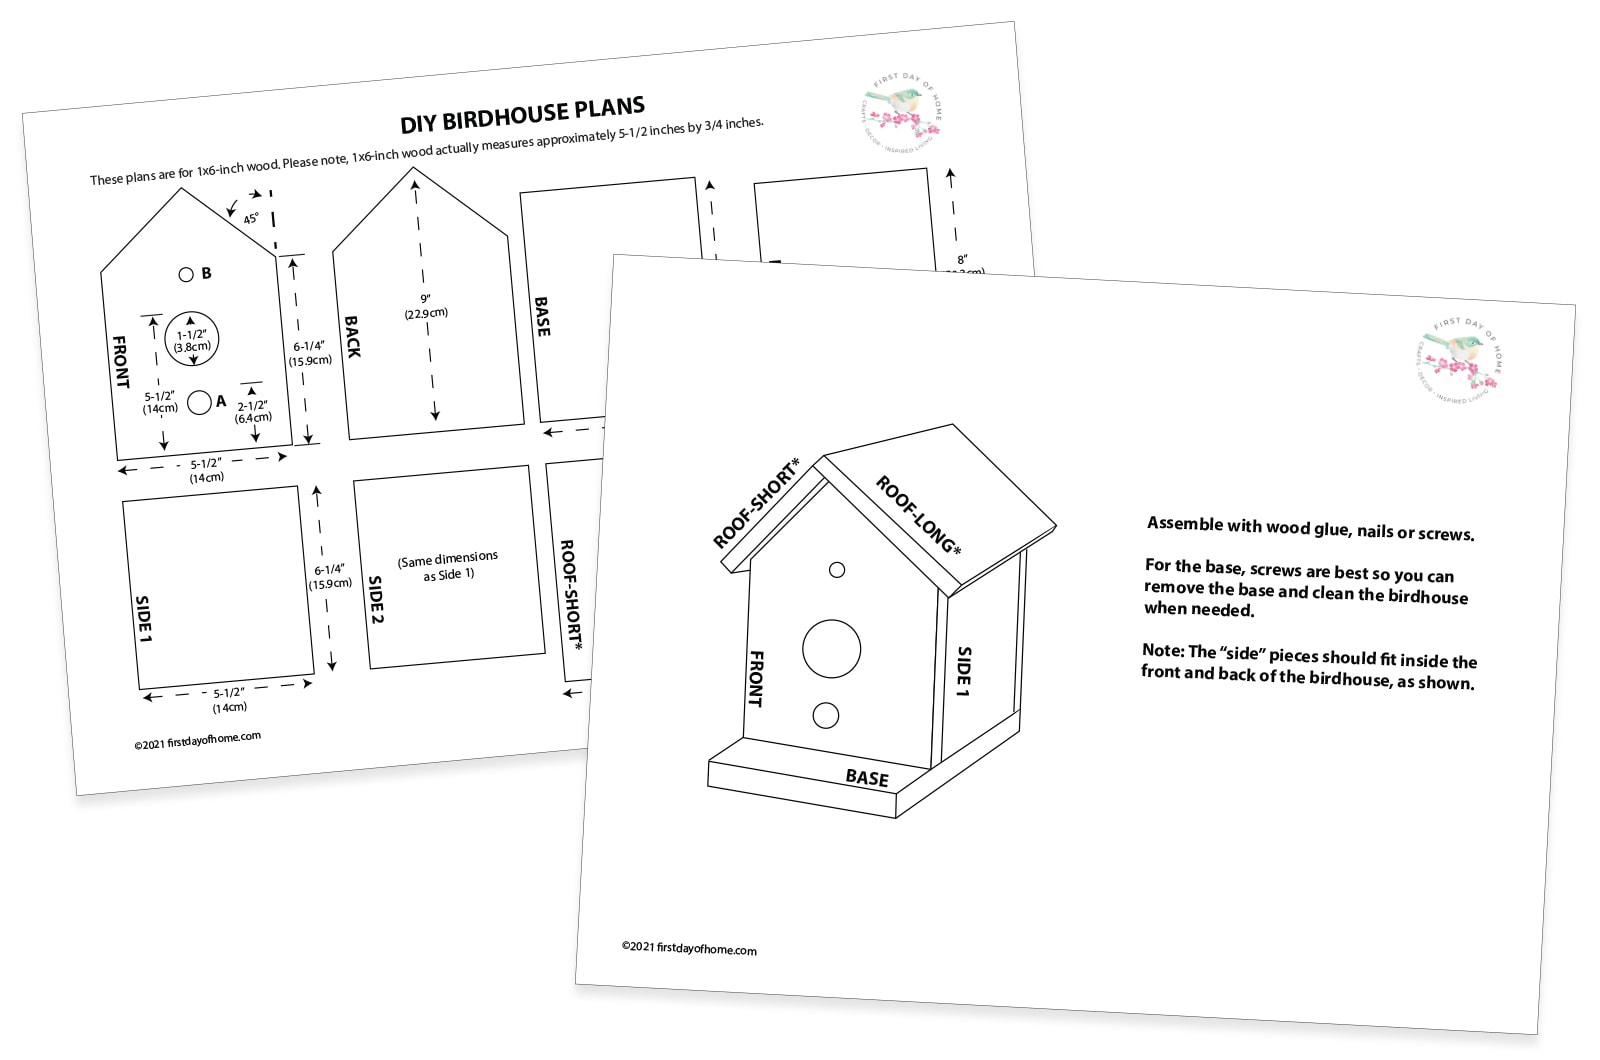 DIY birdhouse plans images of free download